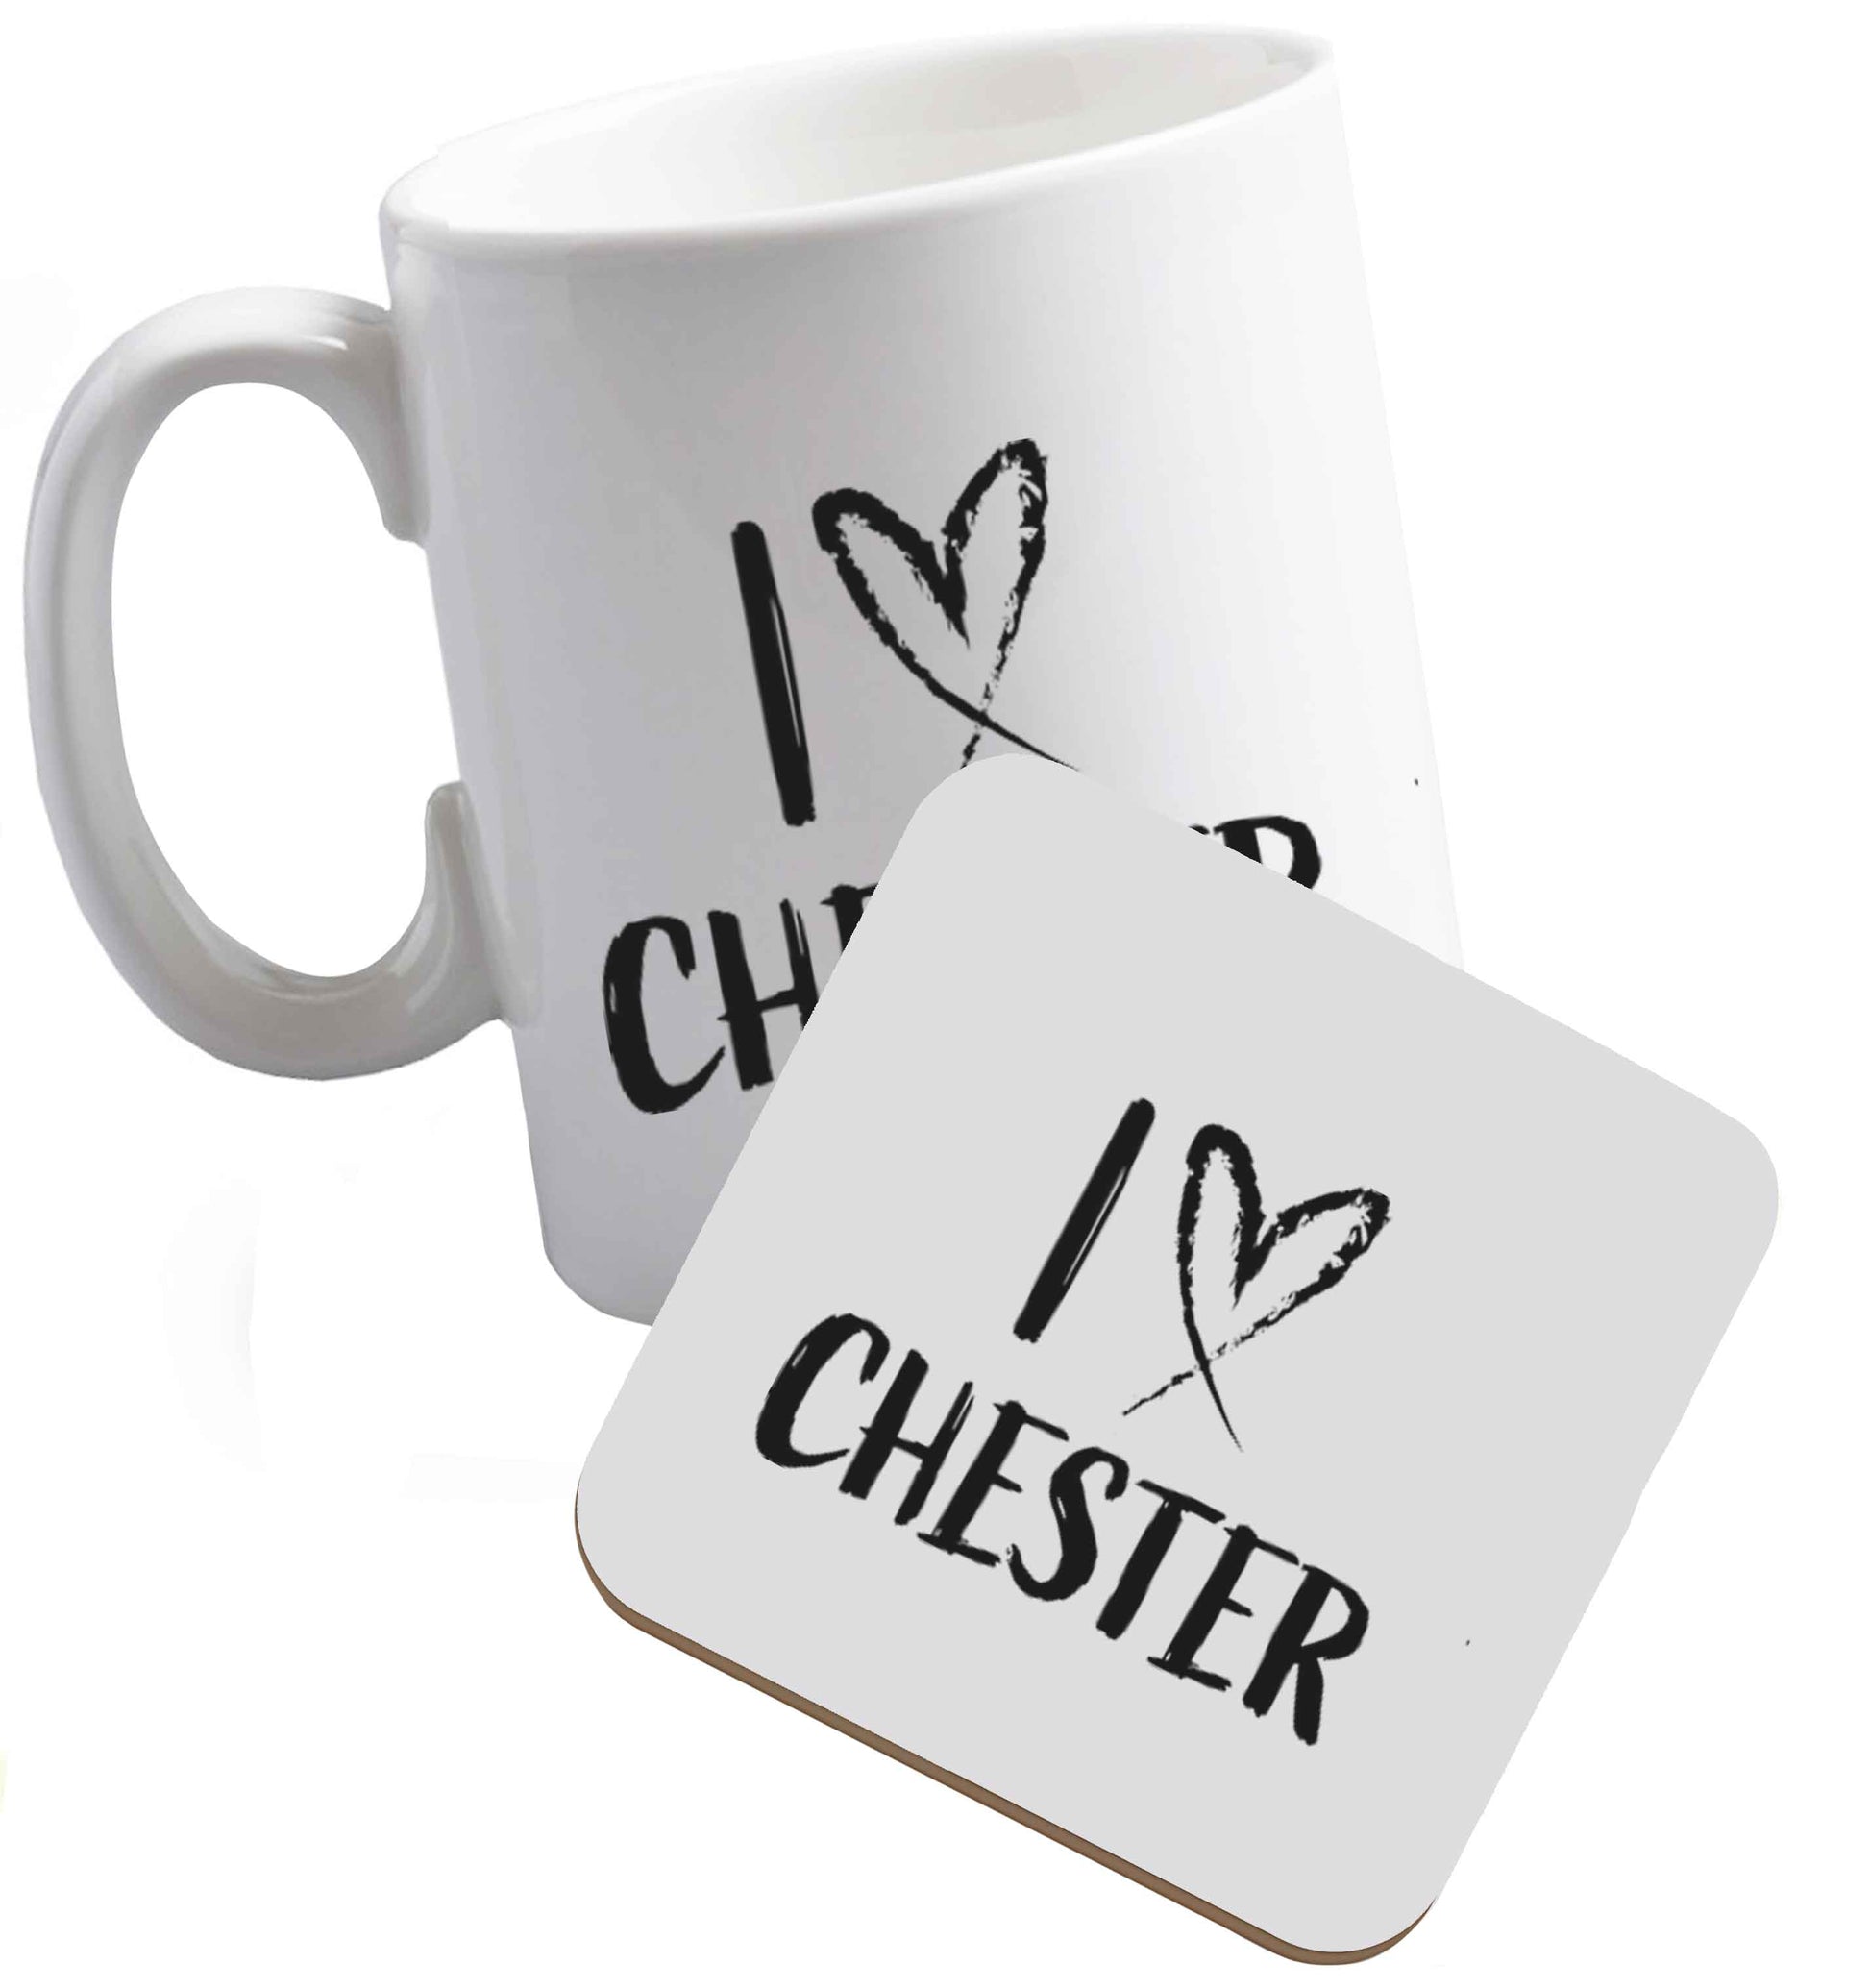 10 oz I love Chester ceramic mug and coaster set right handed